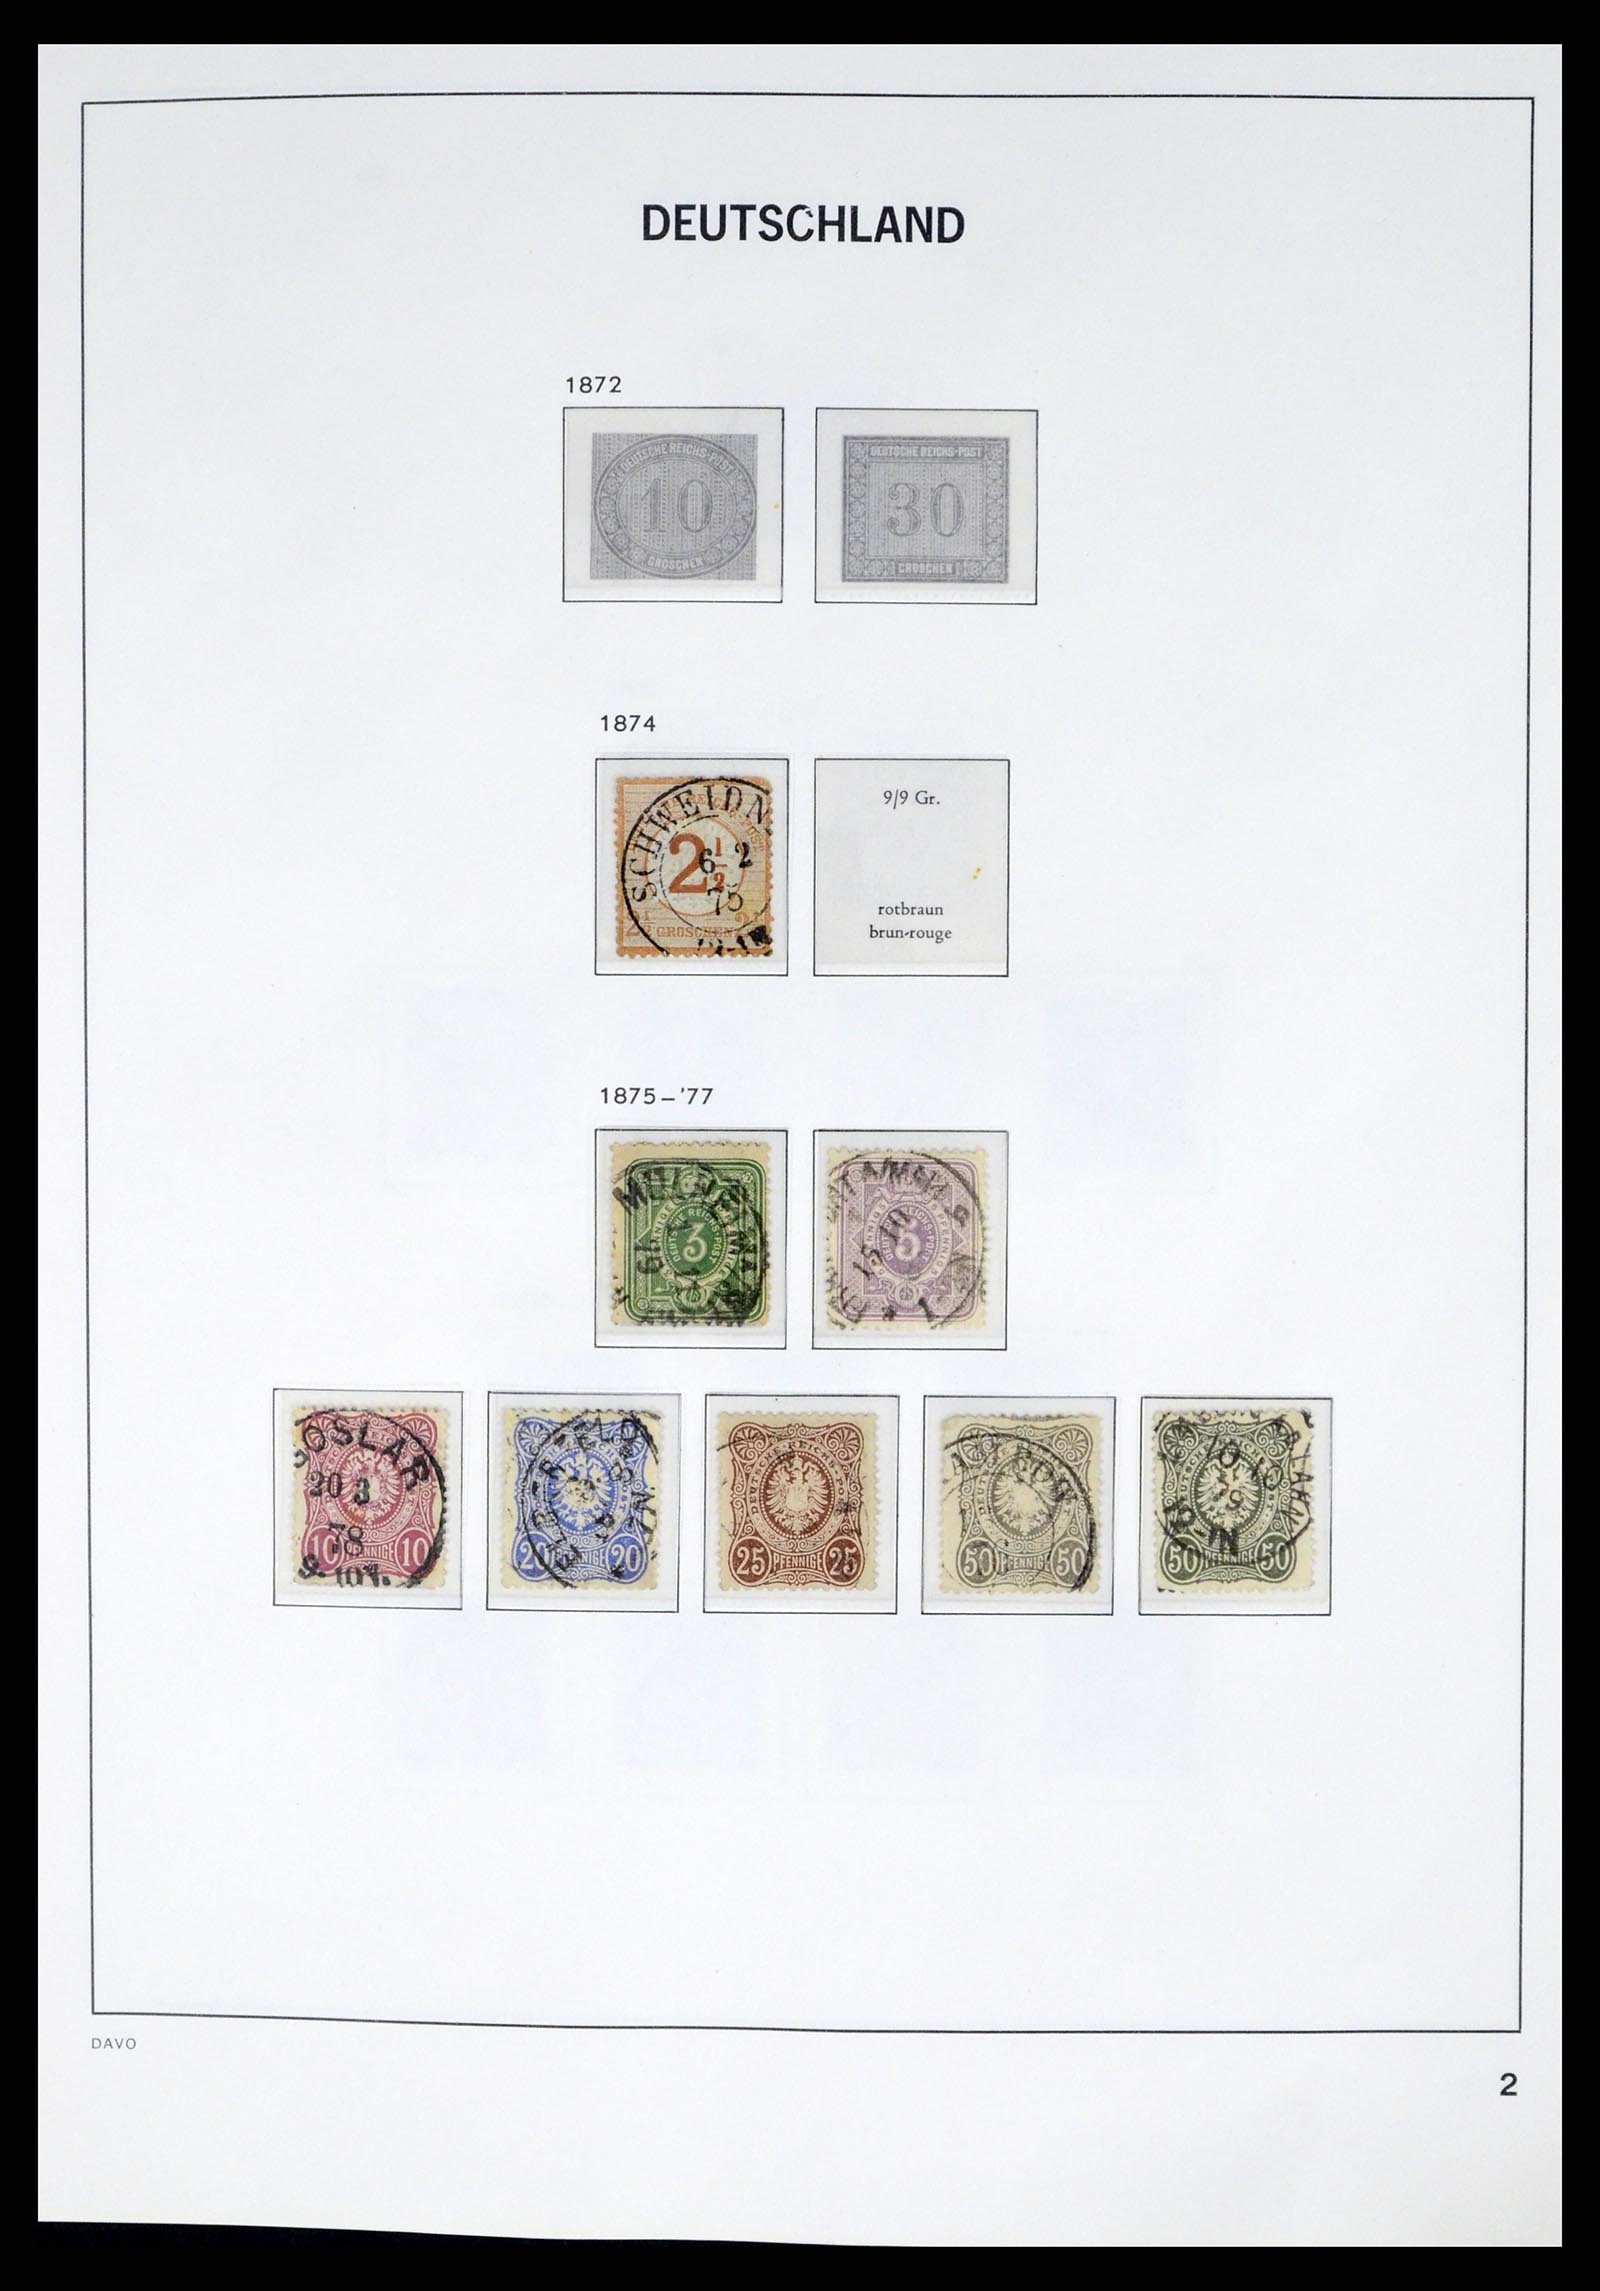 37384 002 - Stamp collection 37384 German Reich 1872-1945.